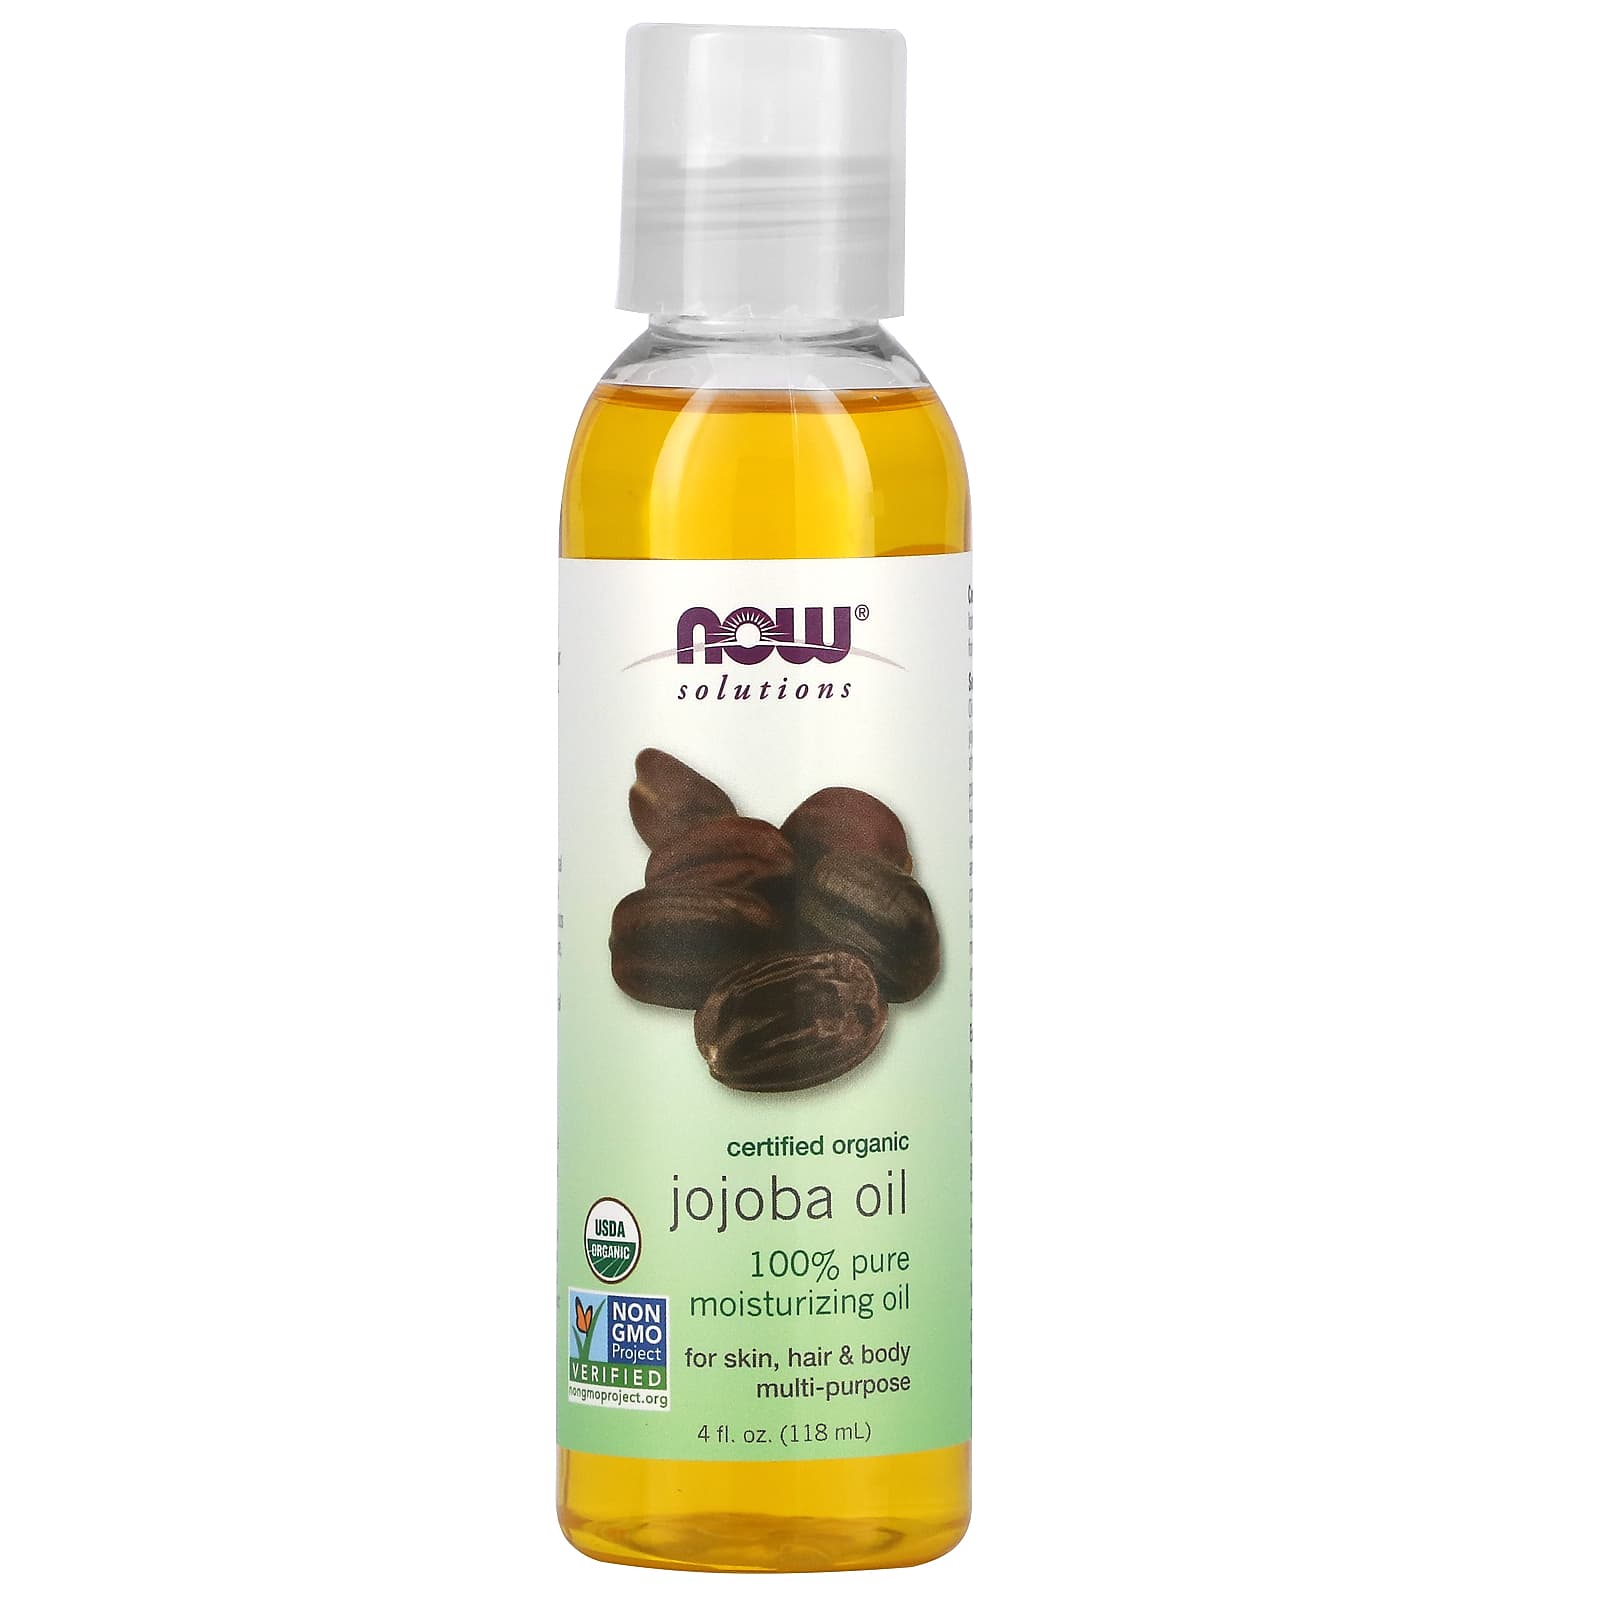 Solutions - Certified Organic Jojoba Oil - 4 fl oz (118 ml) - NOW Foods